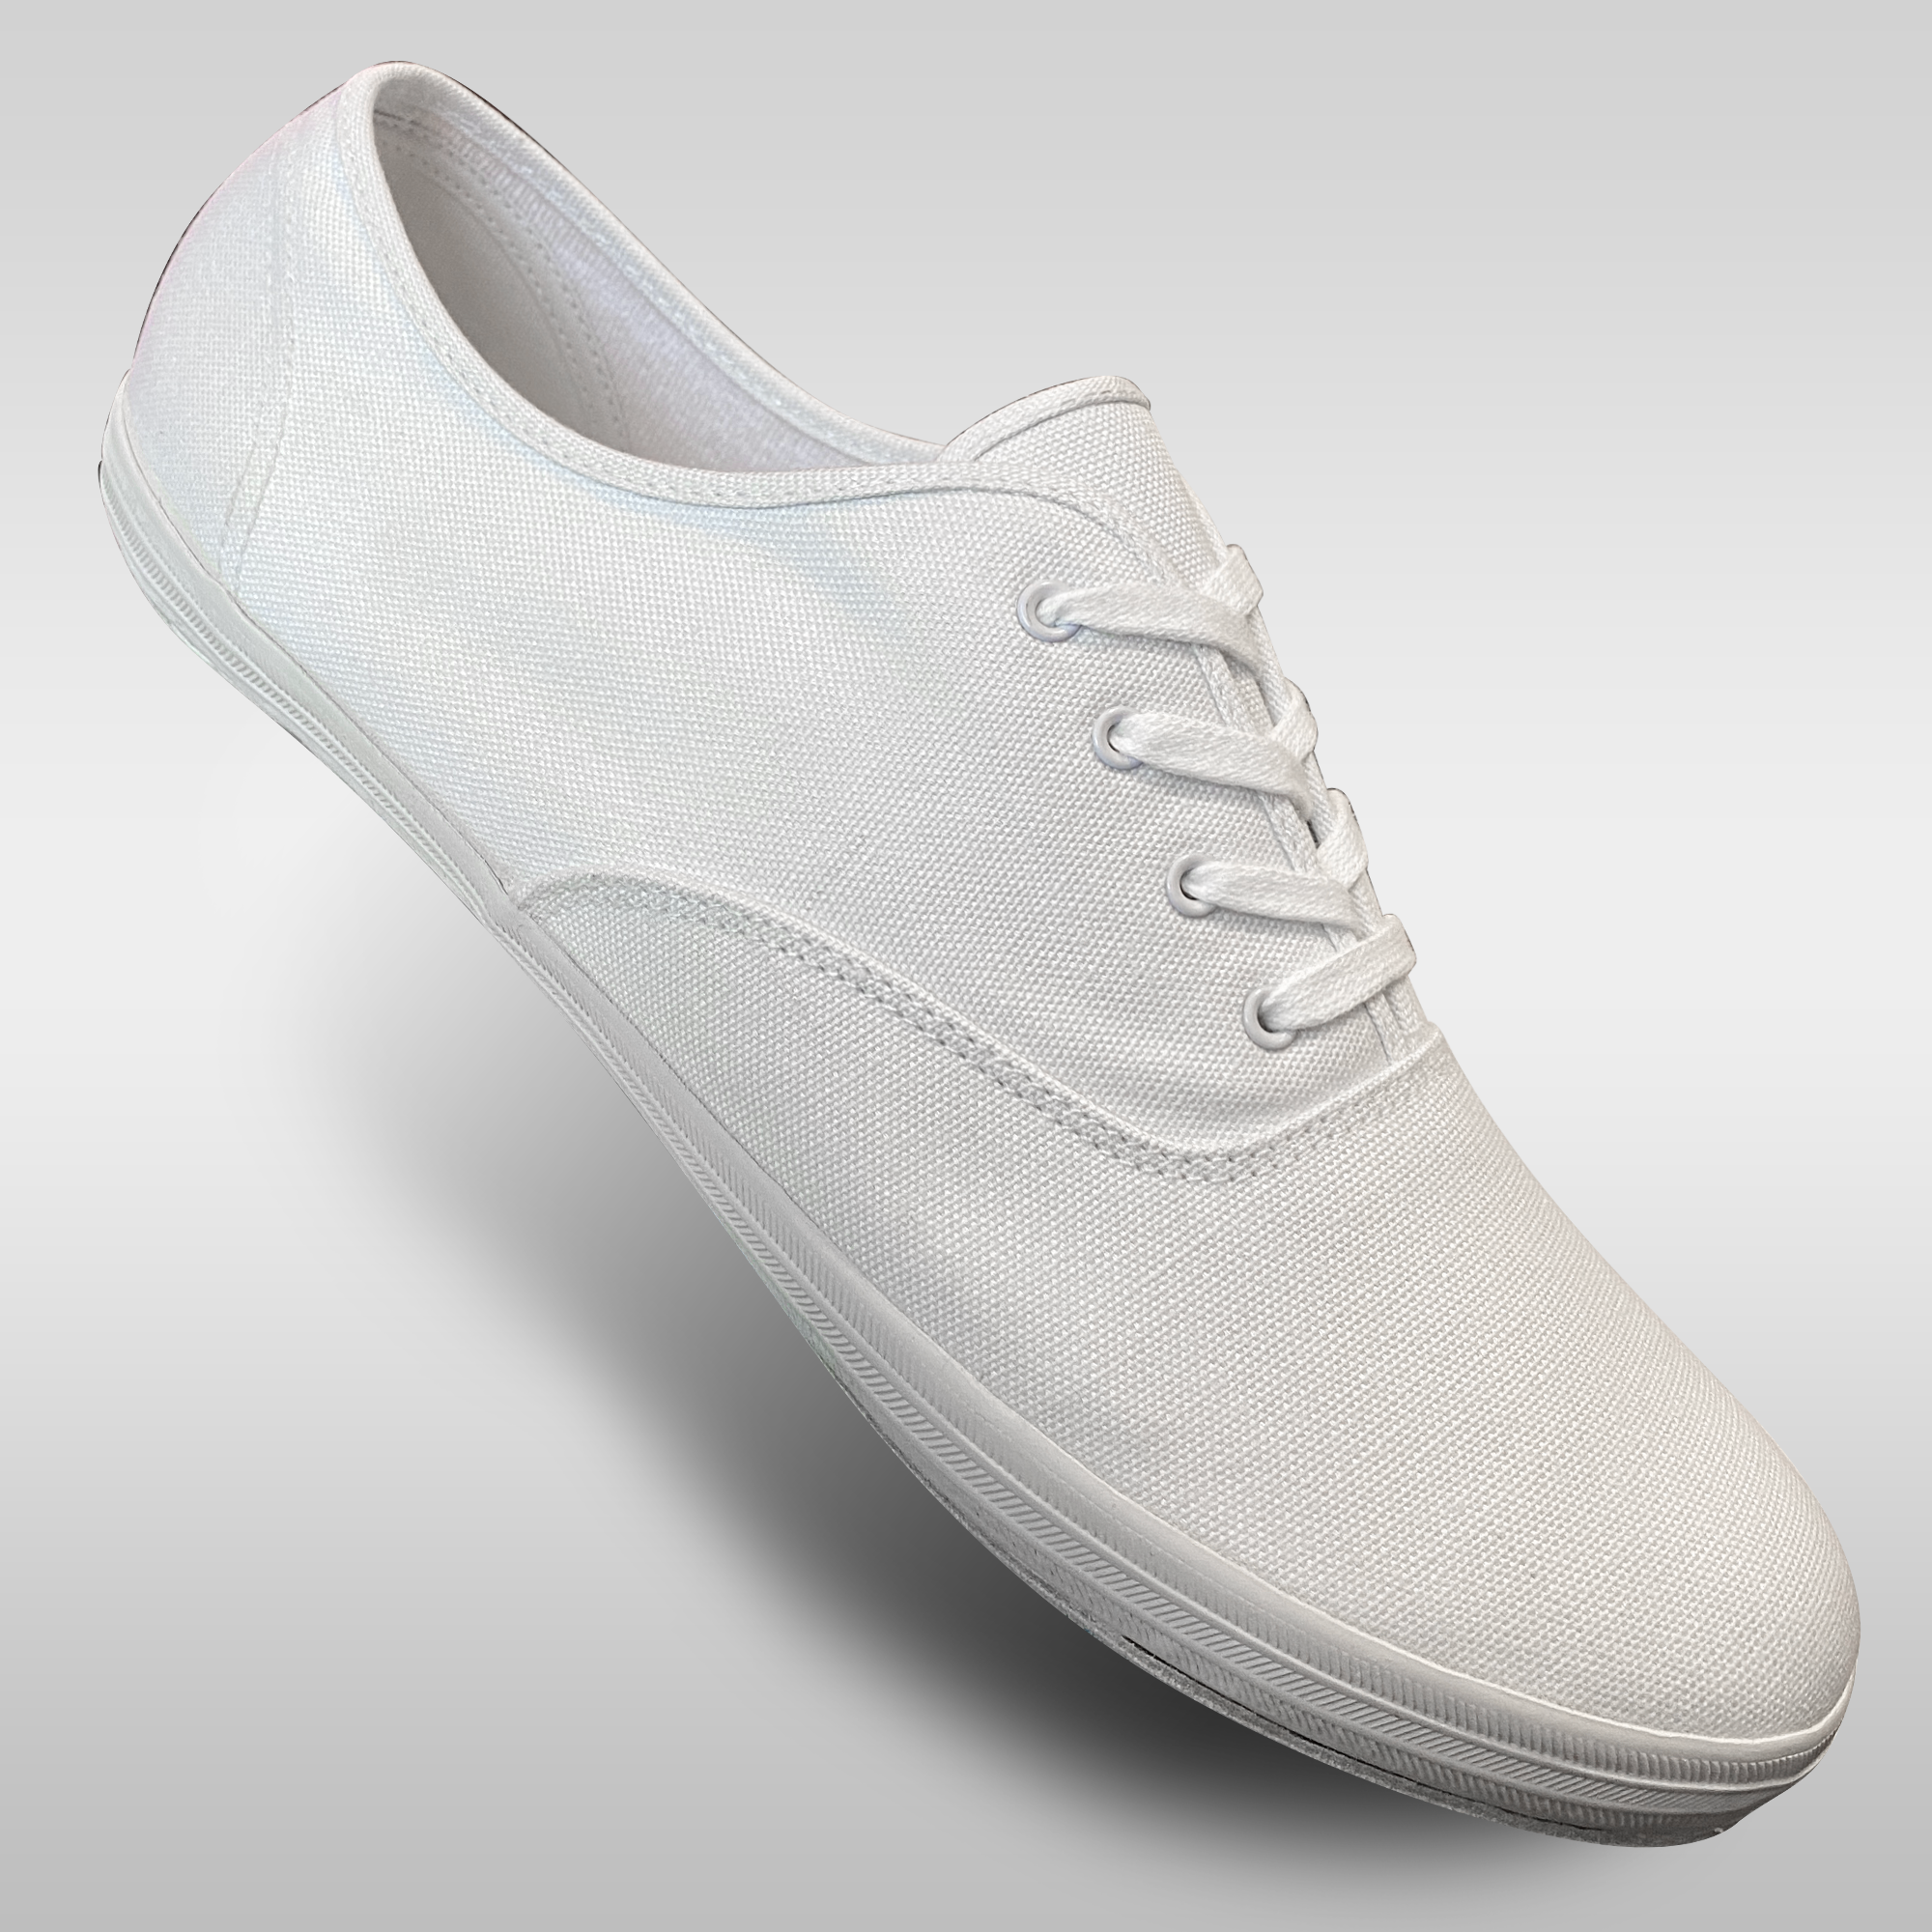 Aris Allen Men's White Retro Canvas Dance Sneakers - Narrow - *Limited Sizes*, 12.5 / White